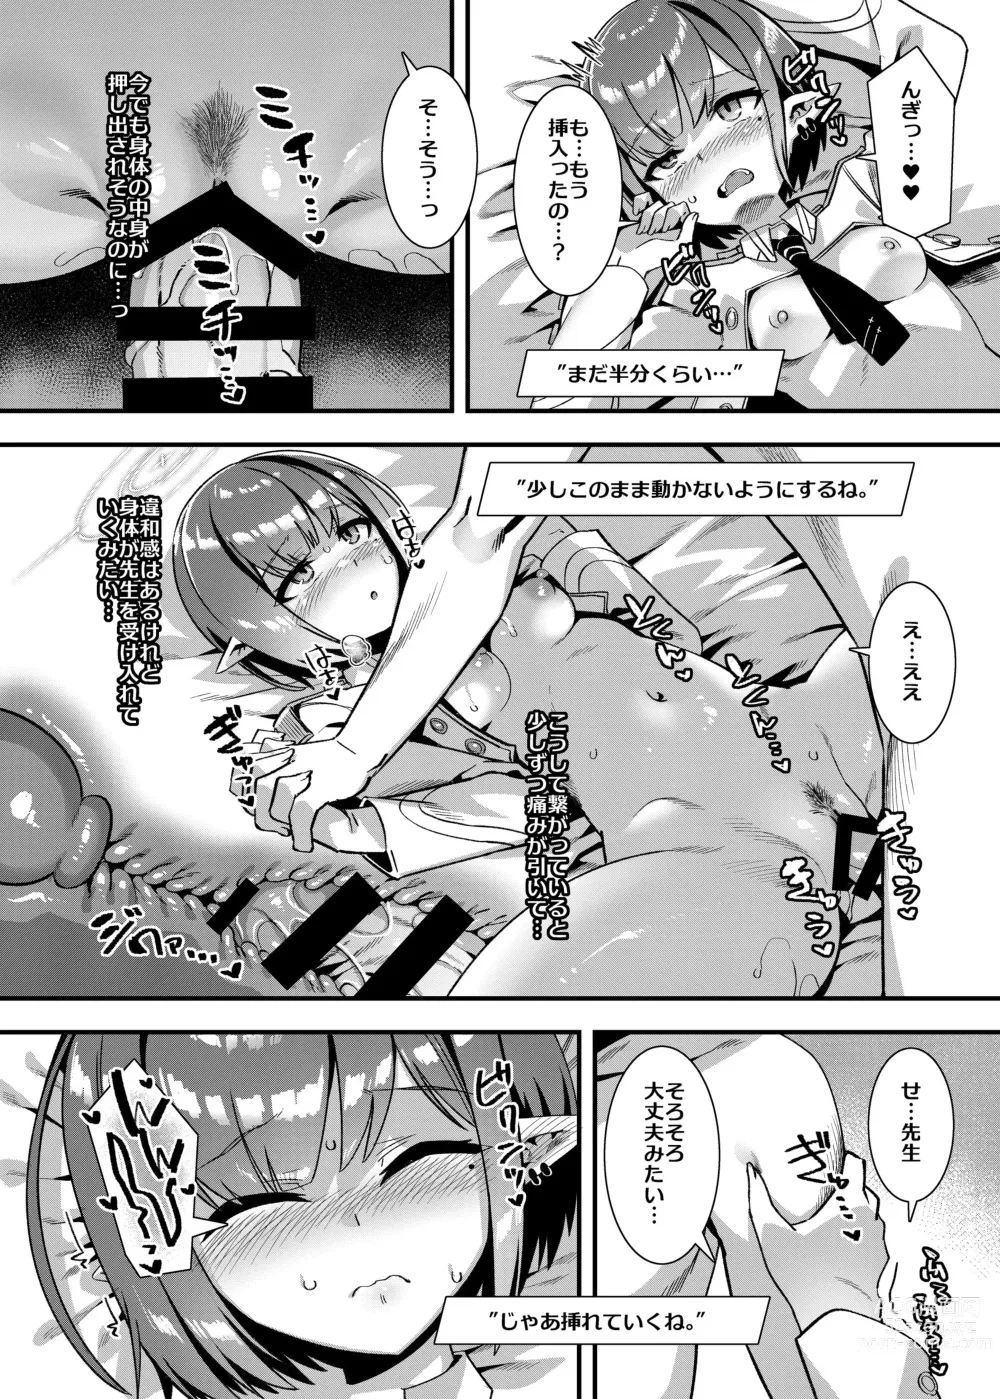 Page 16 of doujinshi Schale no Seiyoku Shori Gyoumu with Oki Aoi